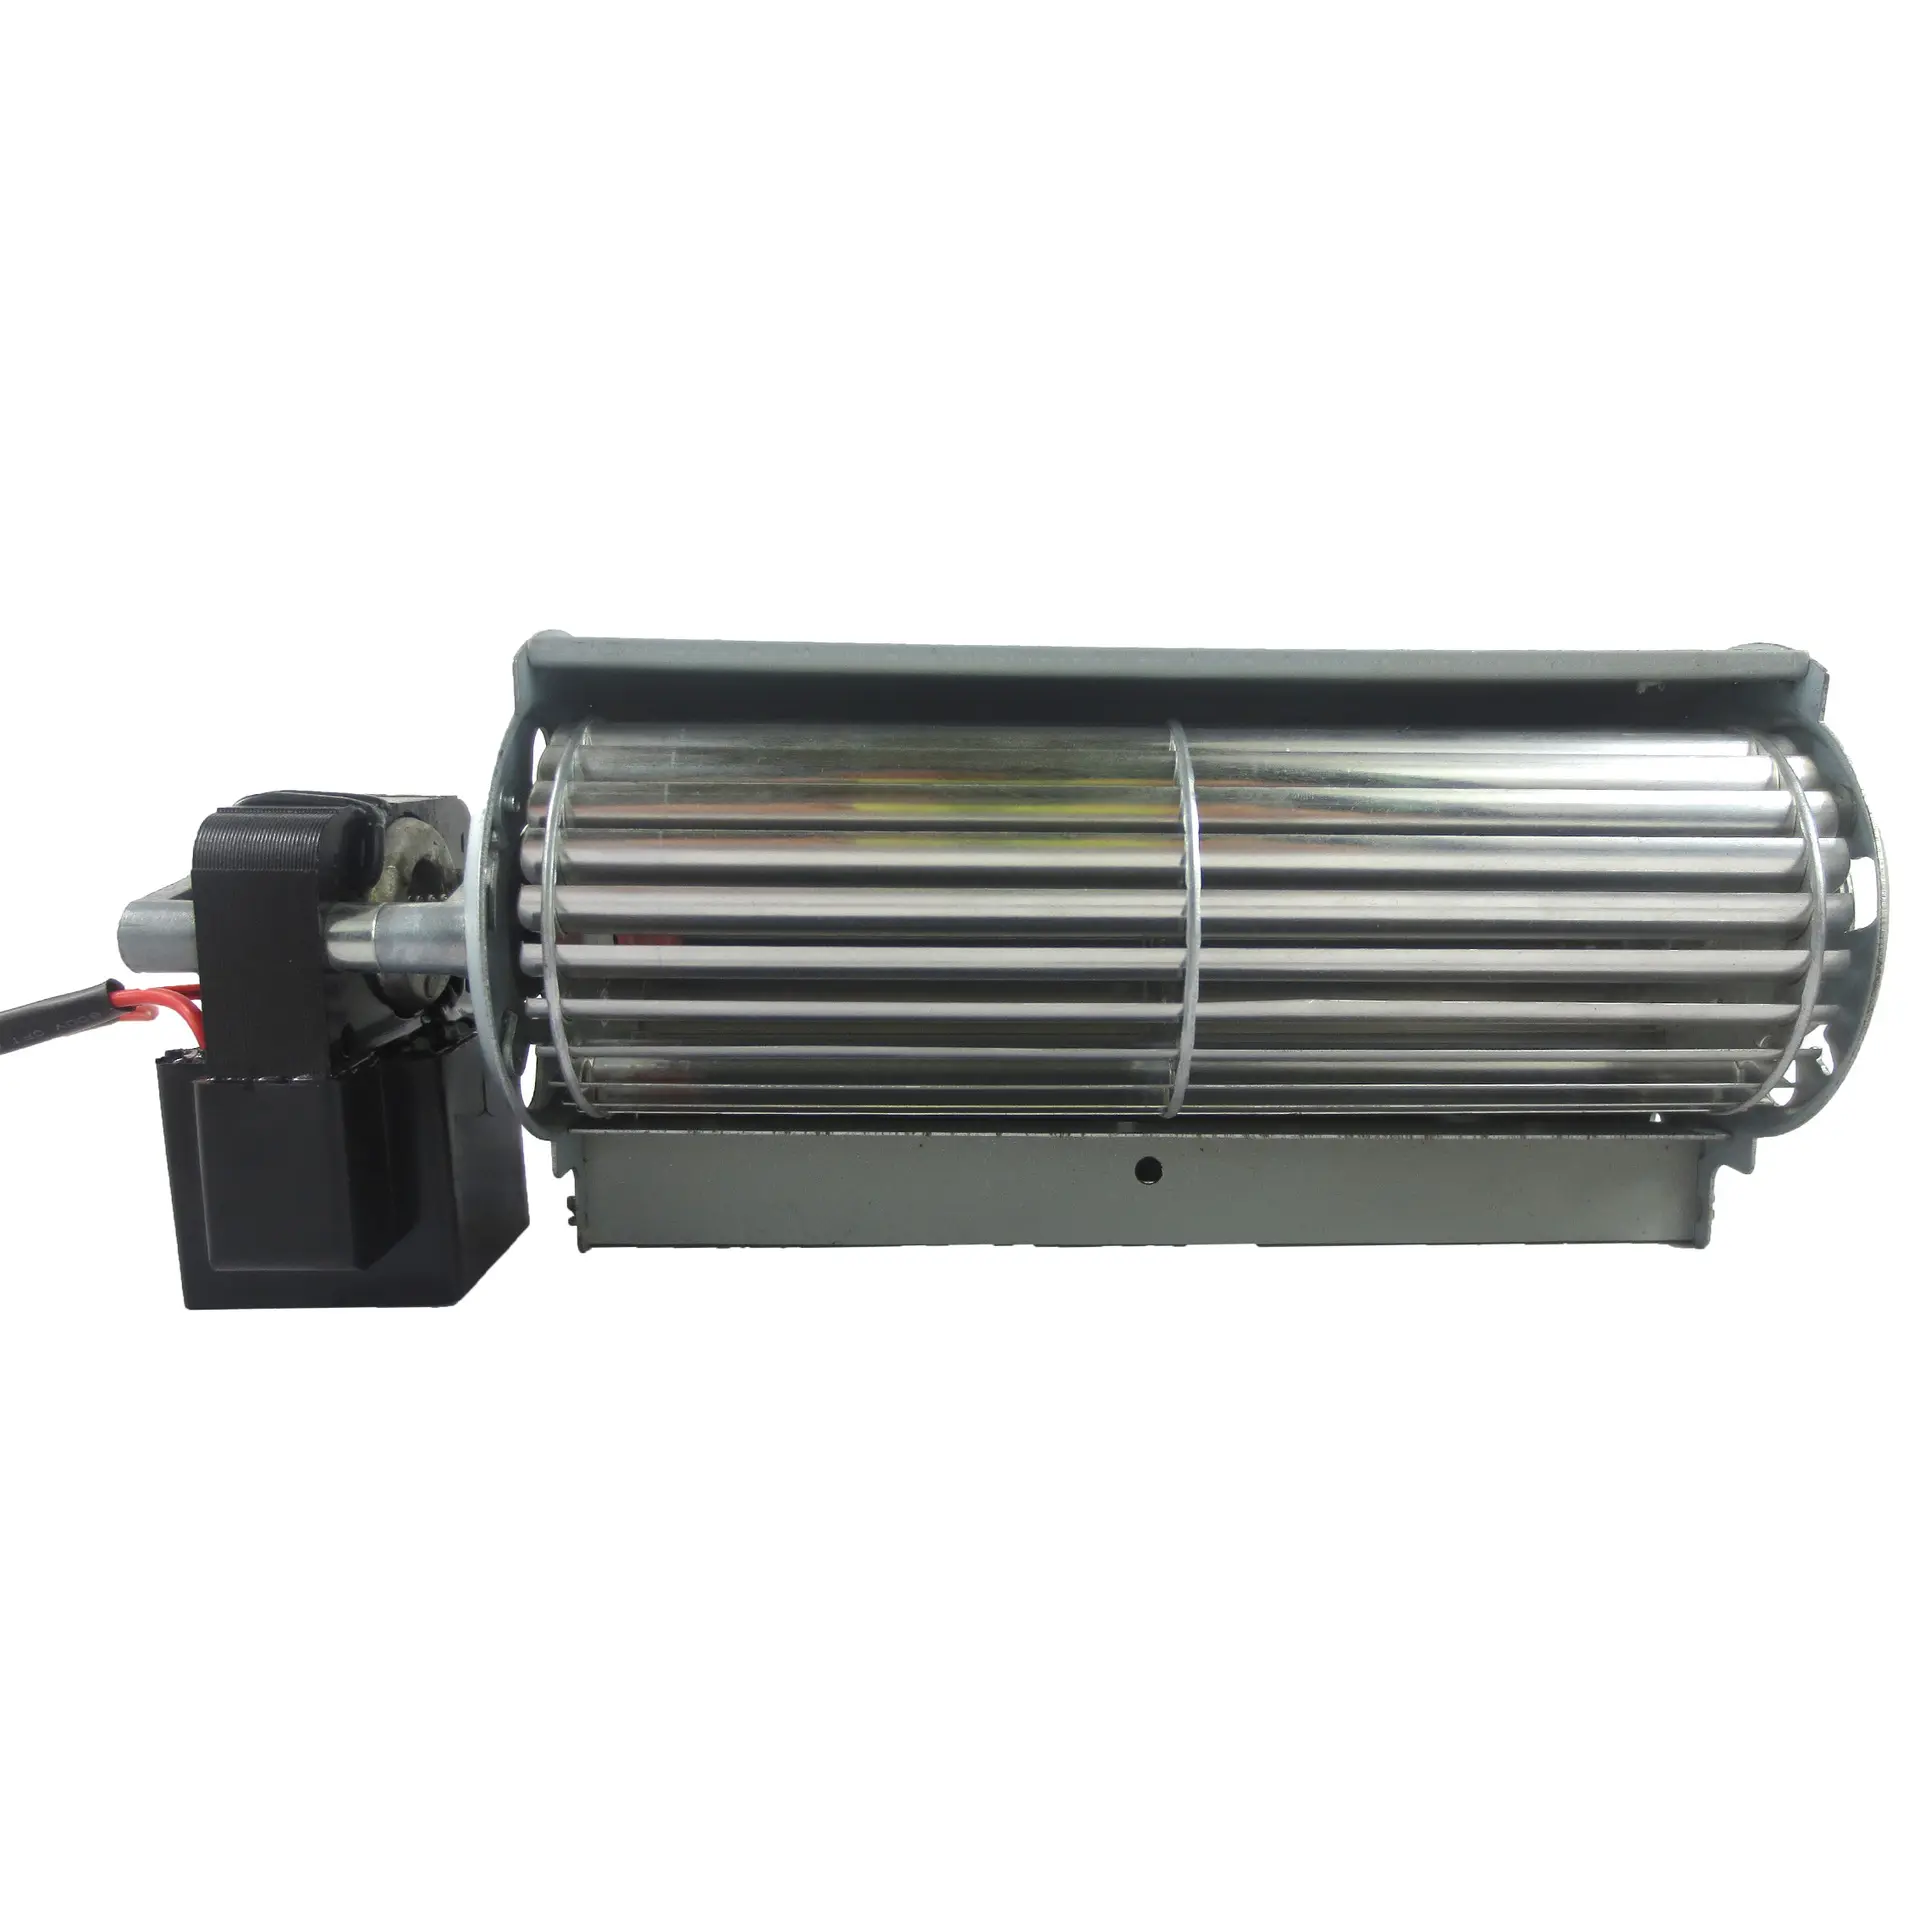 Air conditioner Tangential fan fireplace motor dc cross flow fan AC 110v 220v 230V 40mm diameter